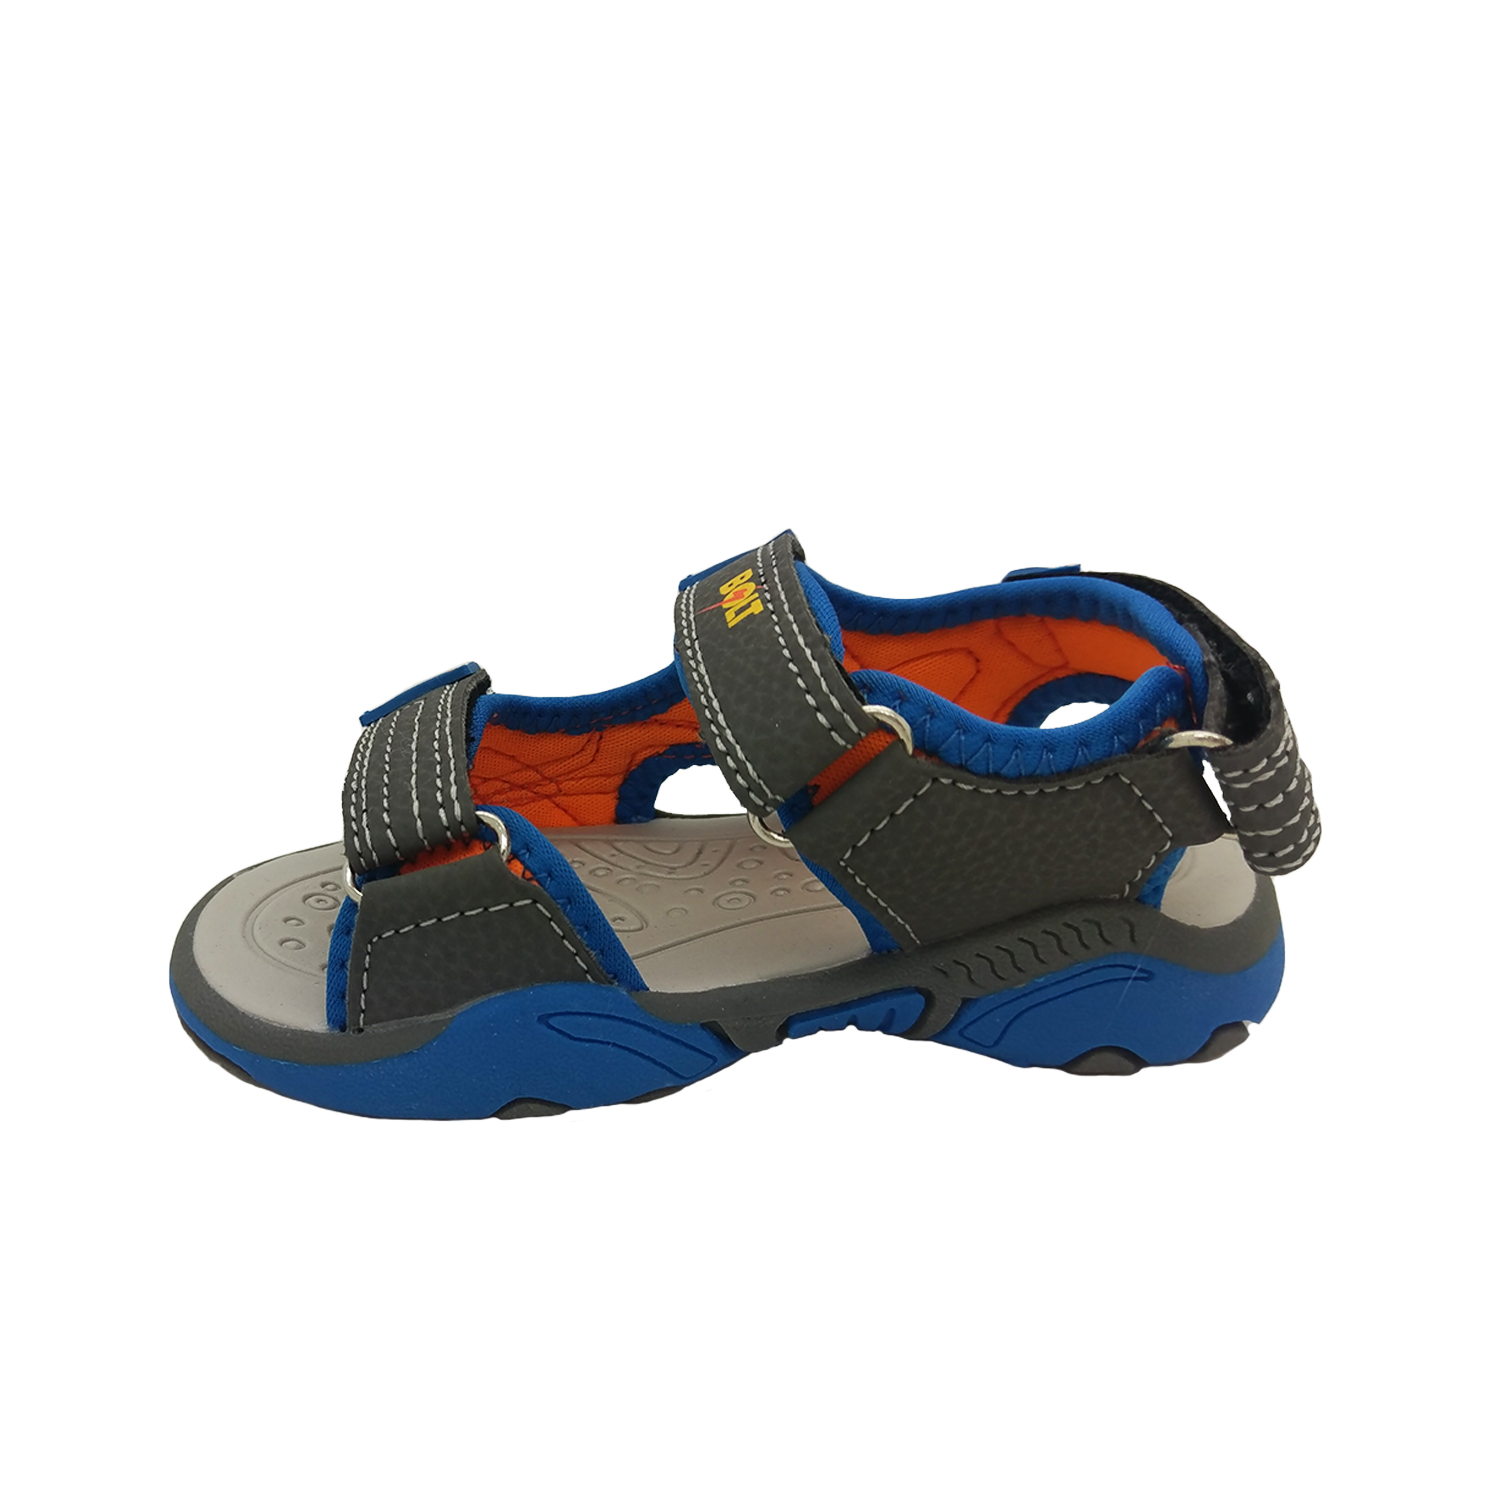 Boys Shoes Bolt Sparrow Summer Surf Sandals LED Light up sole UK Size 7 ...